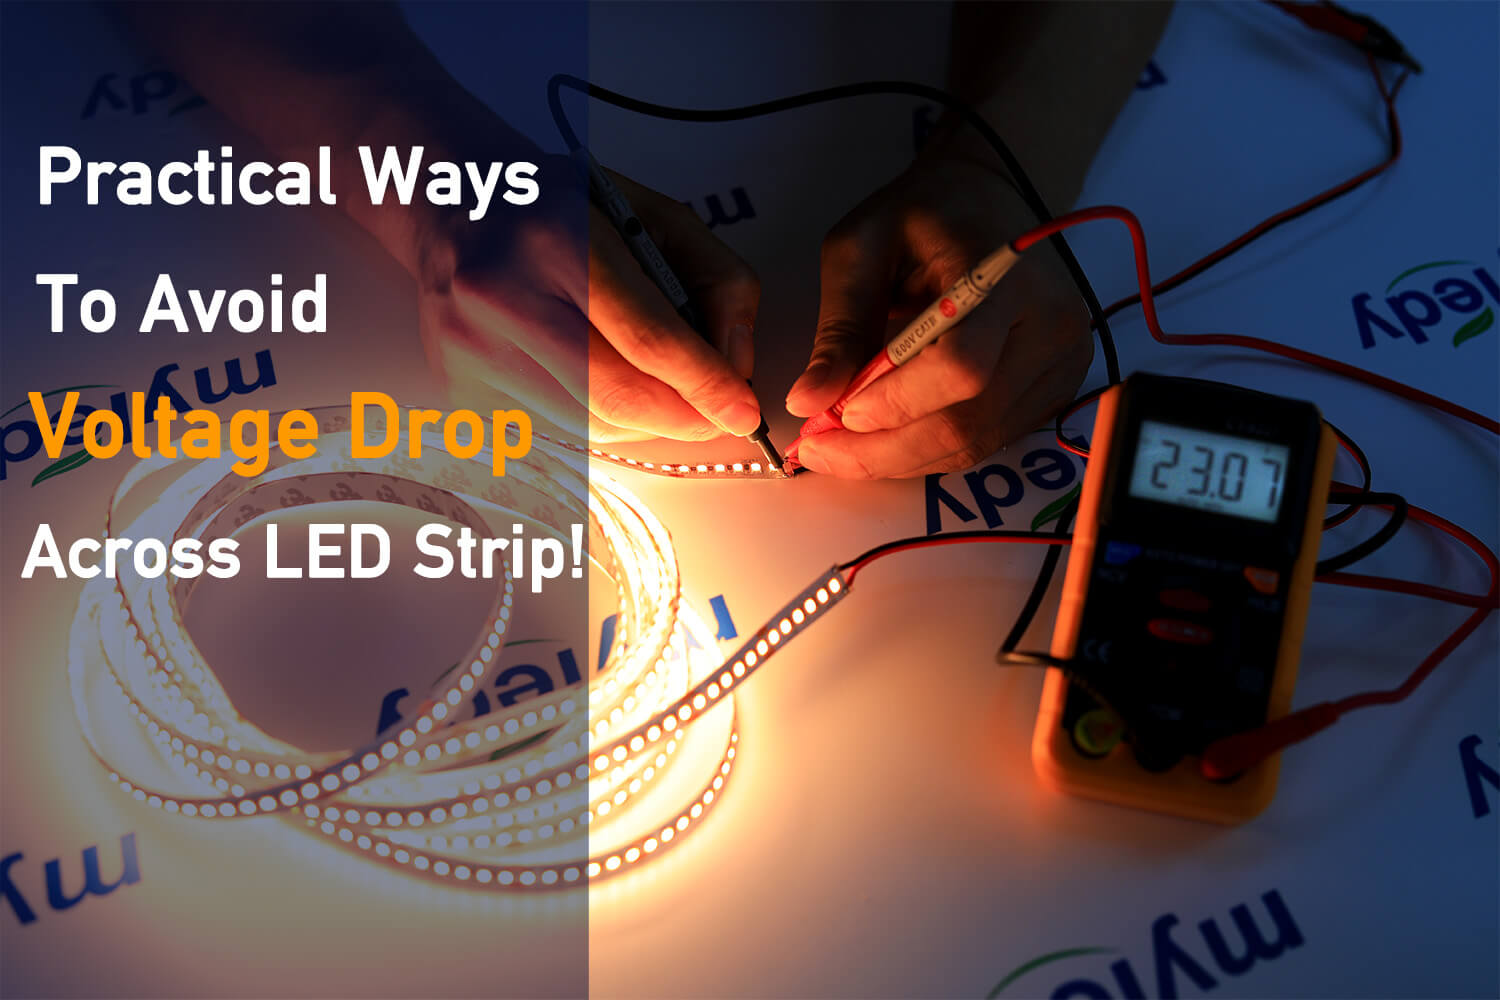 https://www.myledy.com/wp-content/uploads/2021/05/Practical-ways-to-avoid-Voltage-Drop-across-LED-Strip.jpg